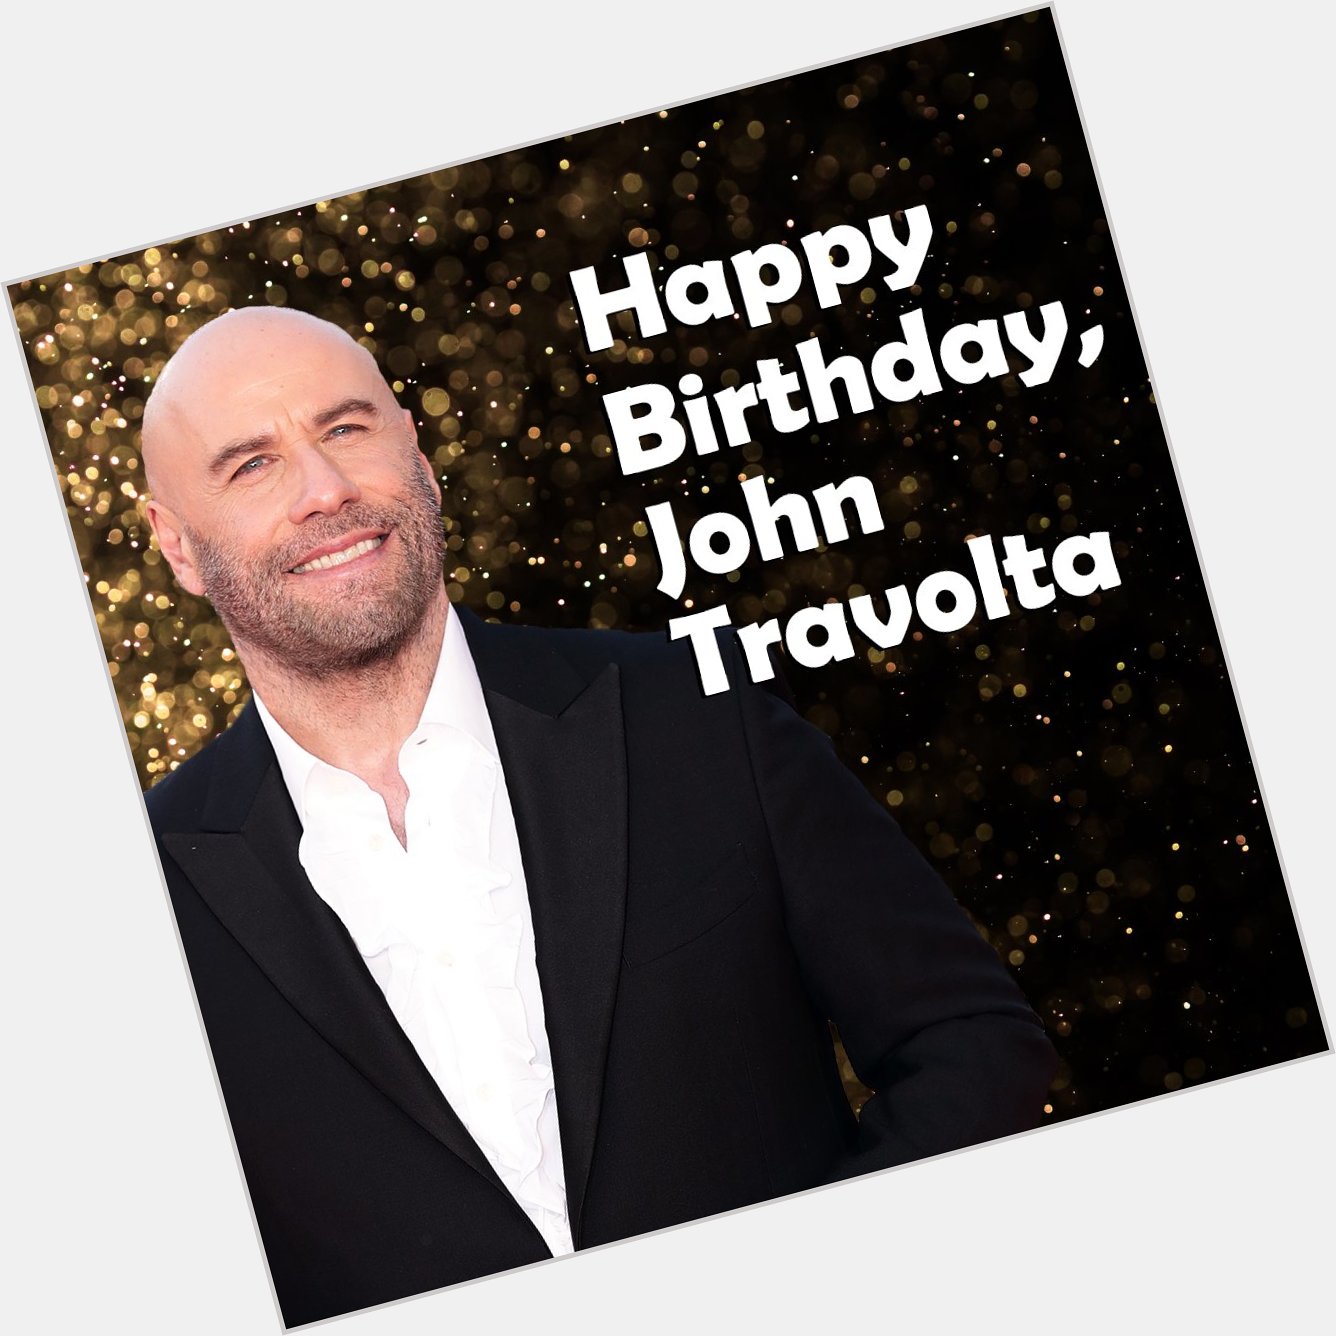 HAPPY BIRTHDAY JOHN TRAVOLTA! The actor turns 66 today! What\s your favorite Travolta movie?? 